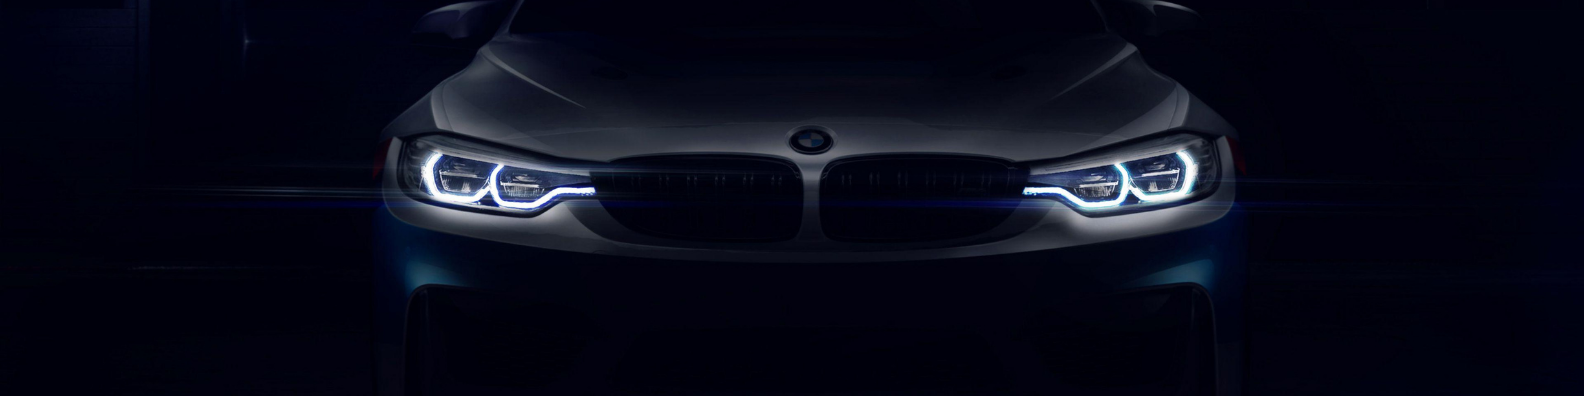 BMW headlights